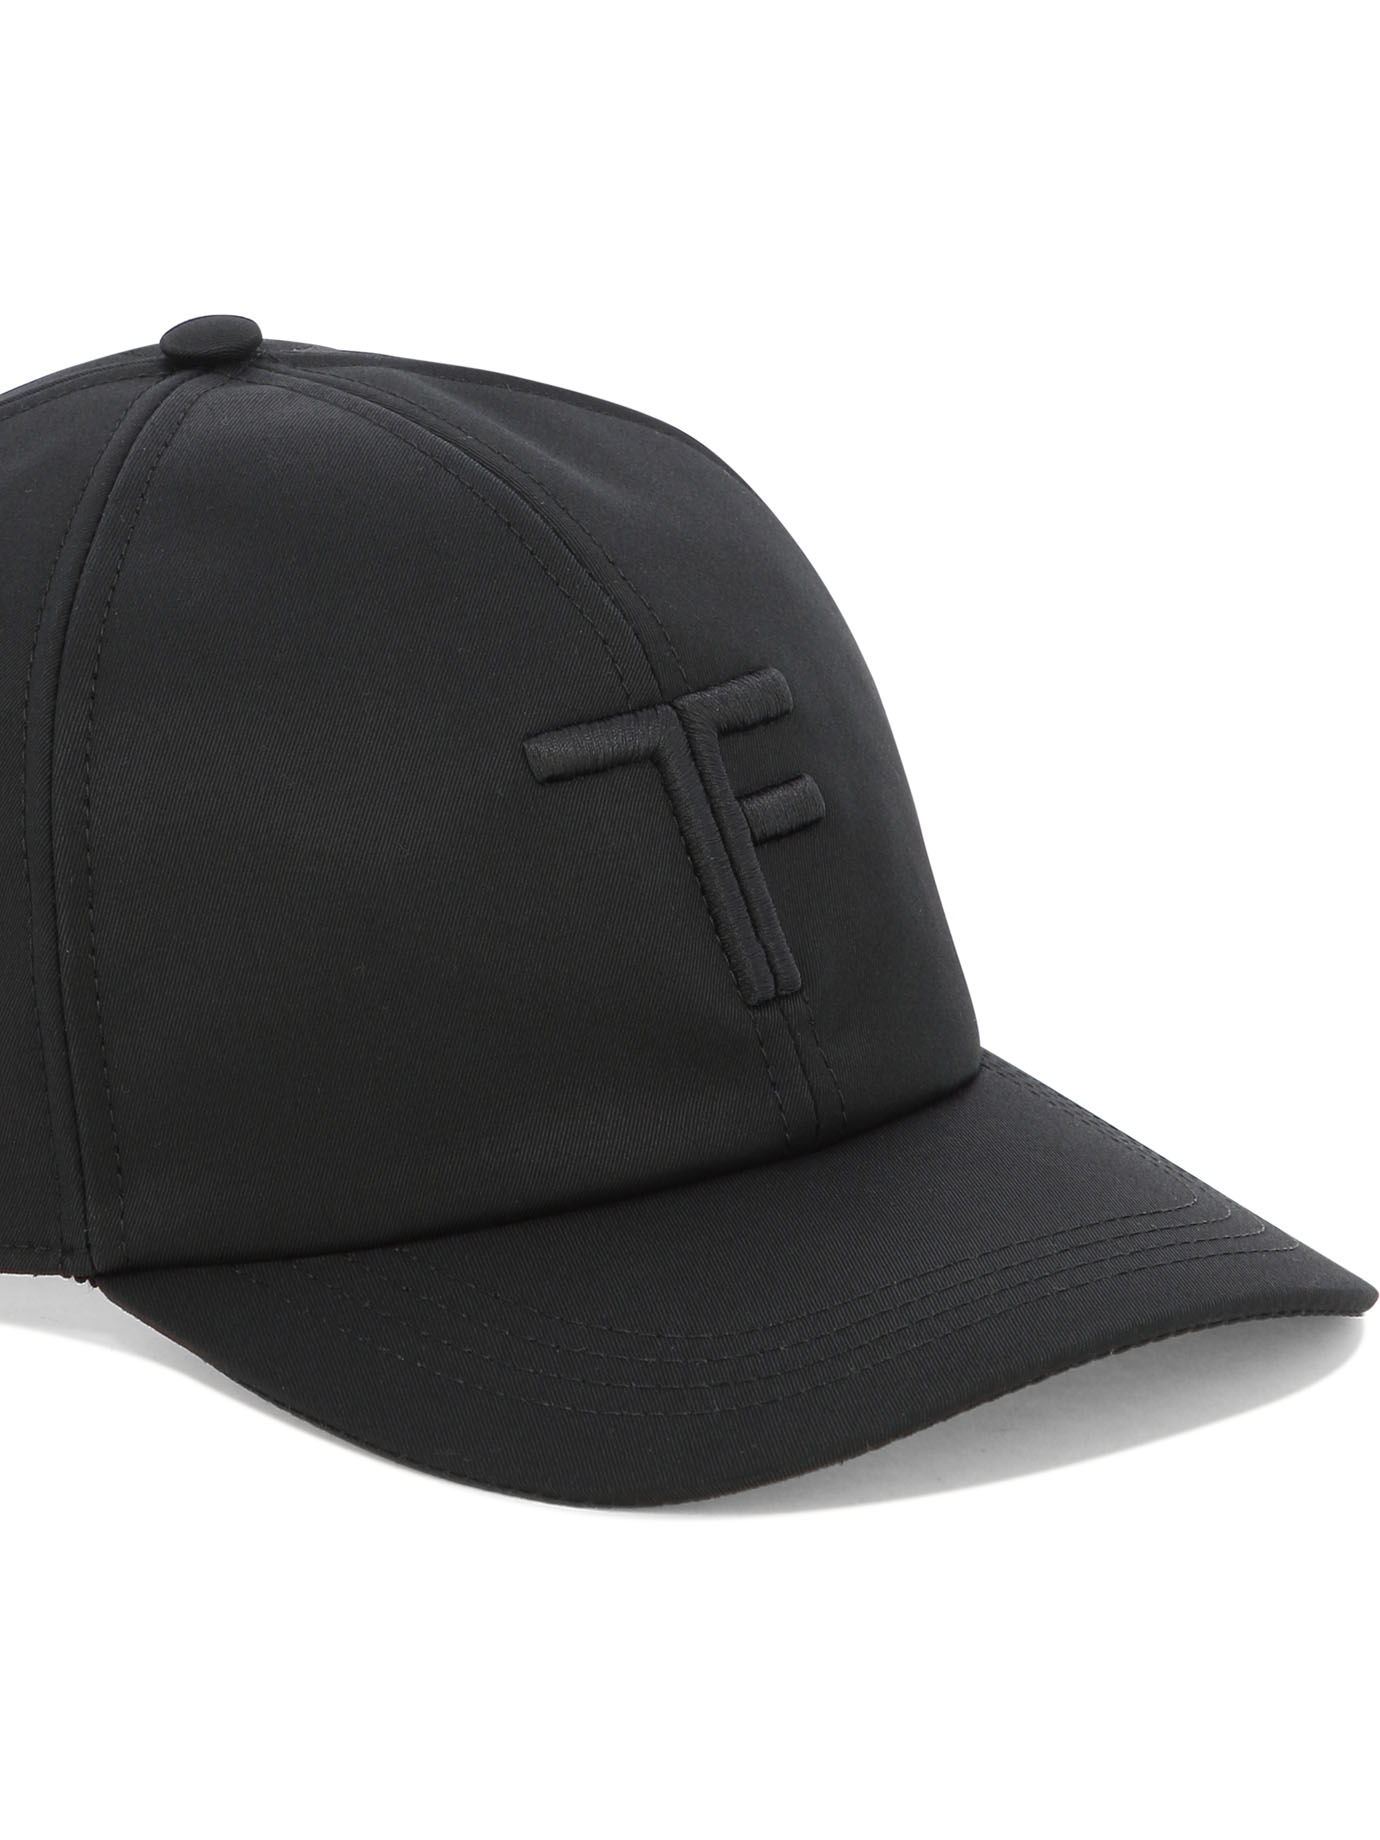 TOM FORD Baseball cap with logo